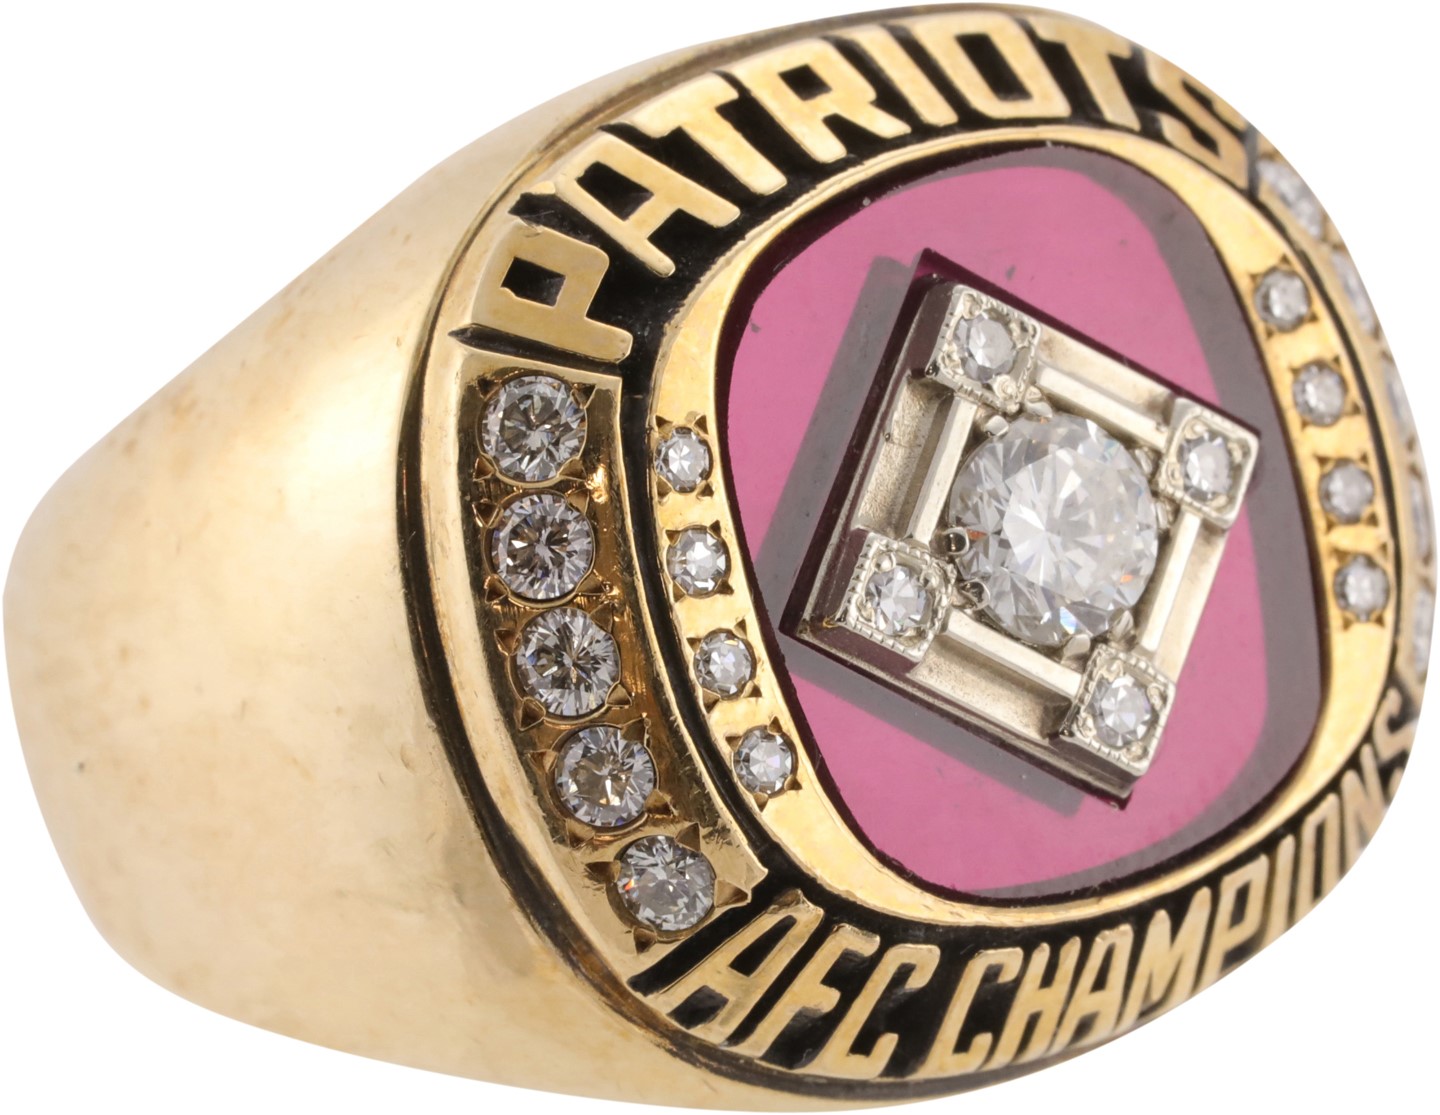 - 1985 New England Patriots AFC Championship Ring